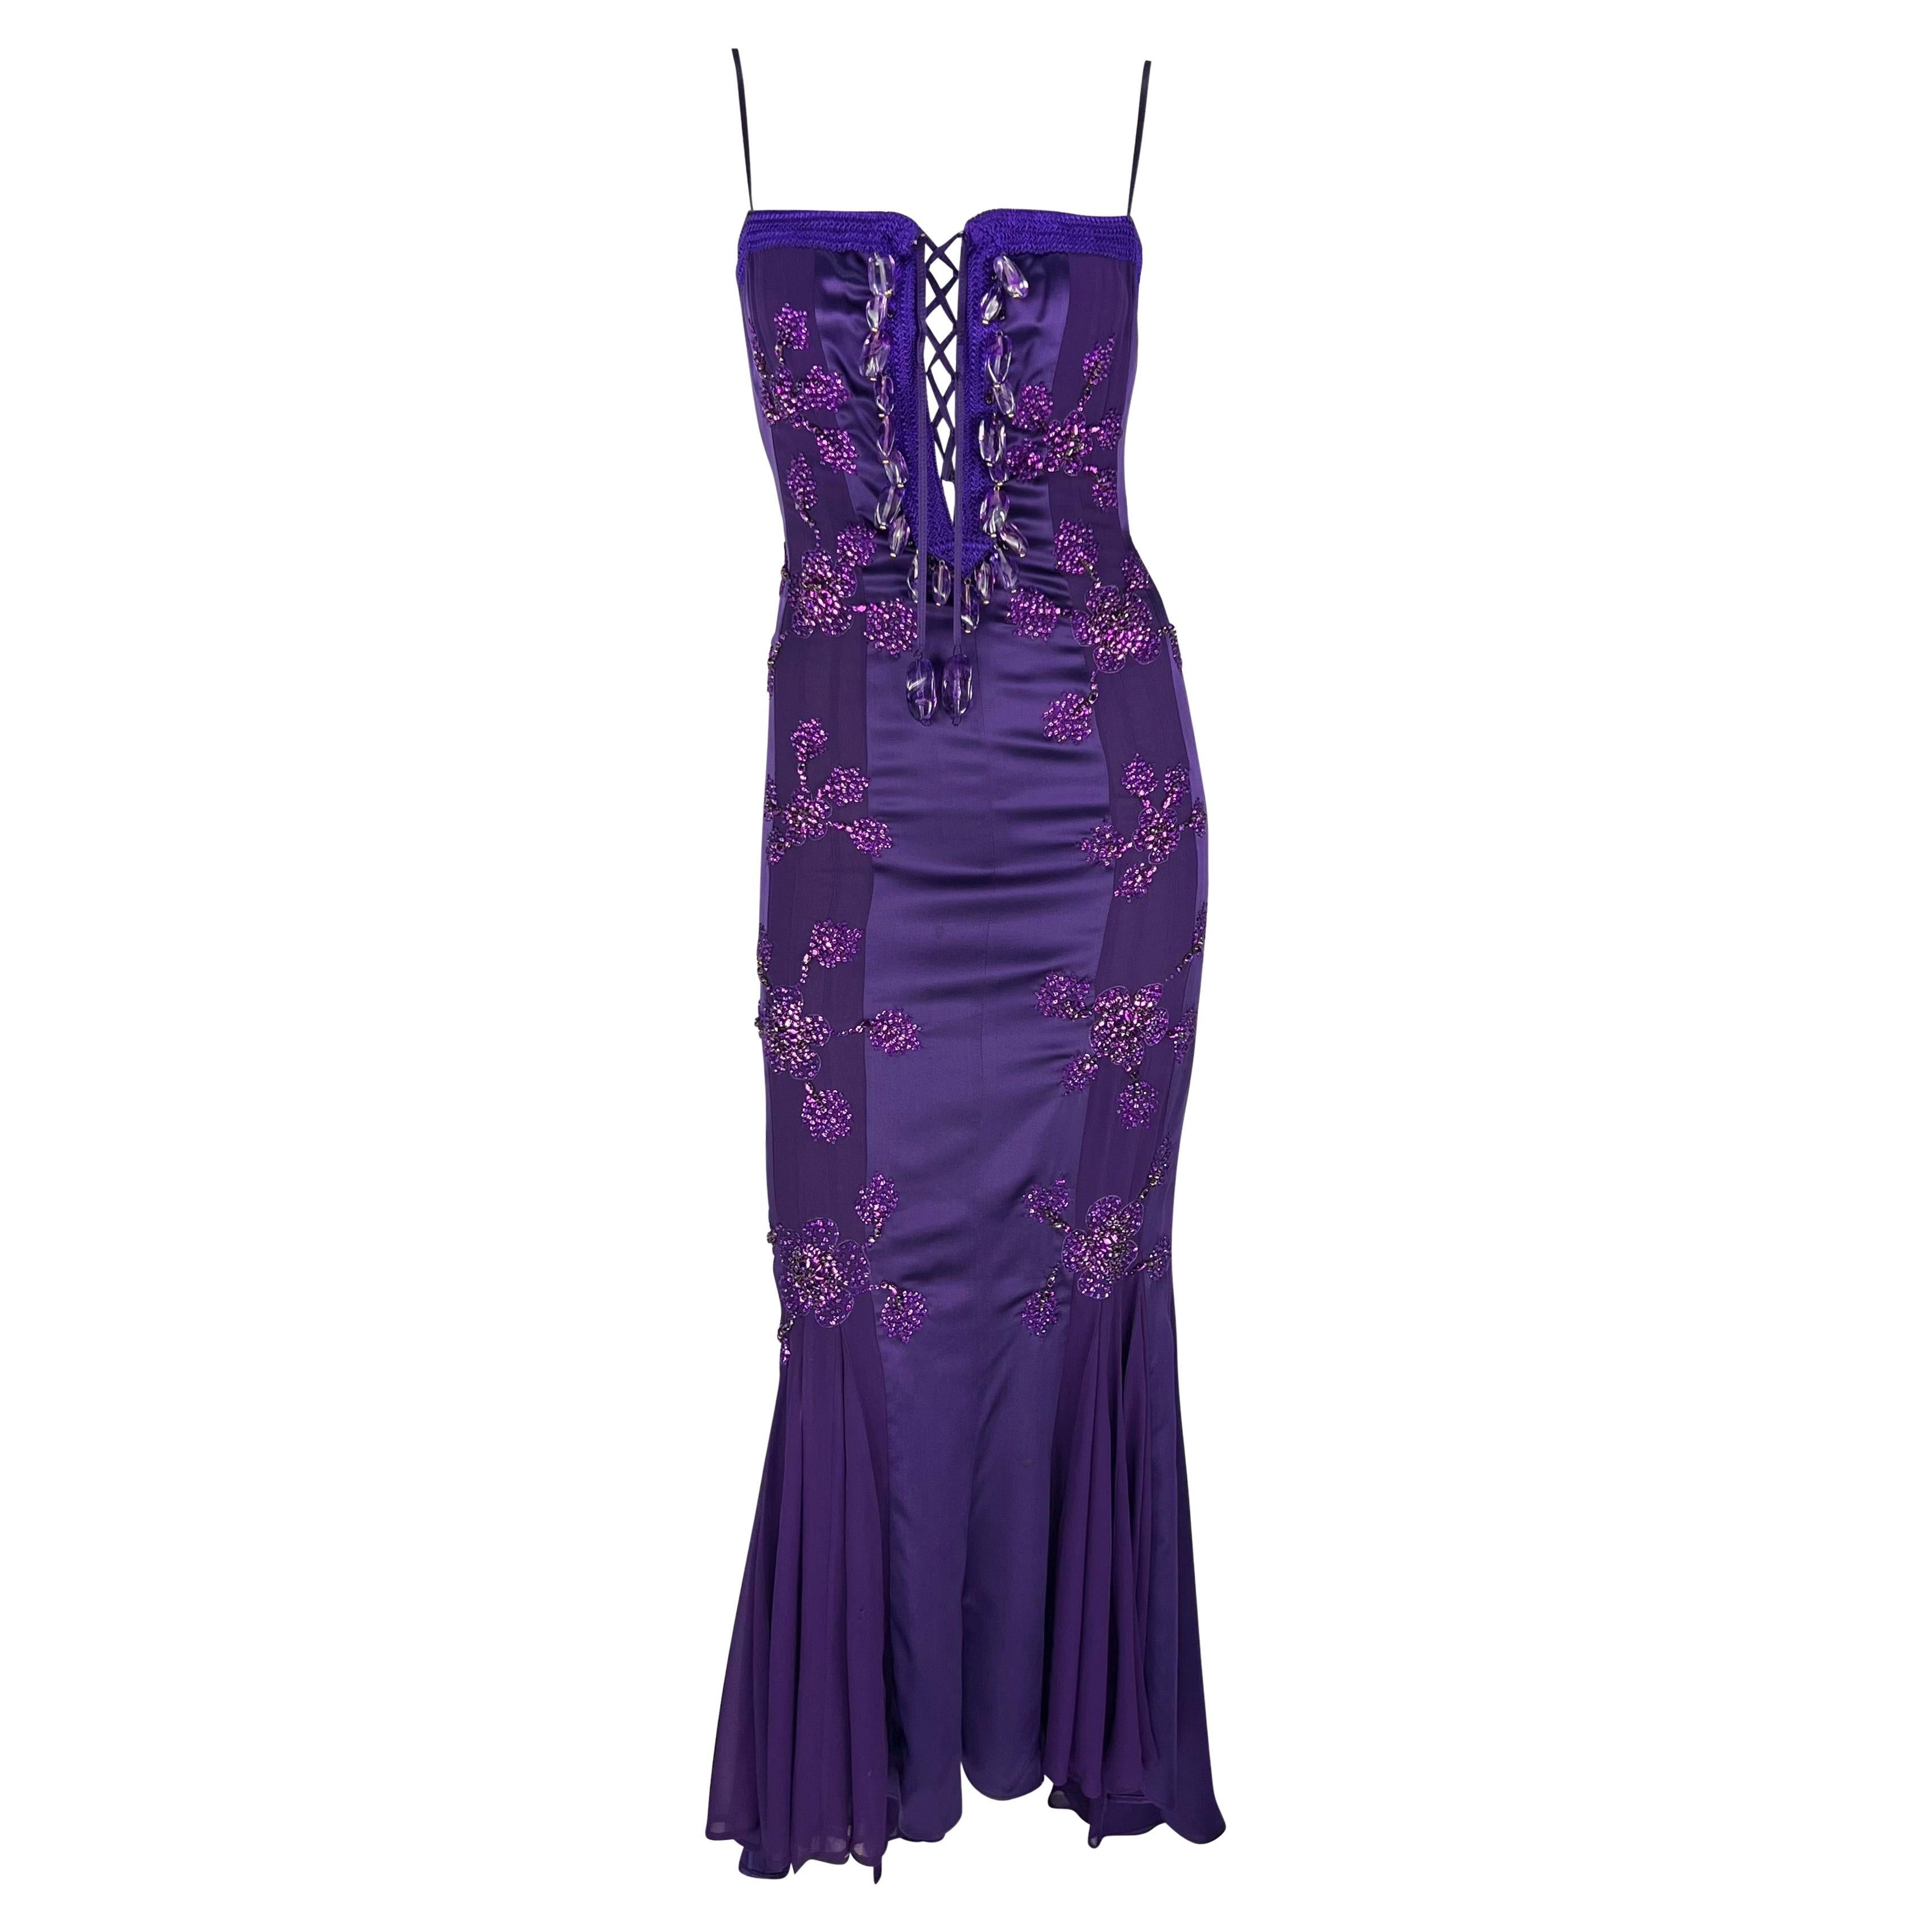 S/S 2005 Emanuel Ungaro by Giambattista Valli Rhinestone Purple Lace-Up Gown For Sale